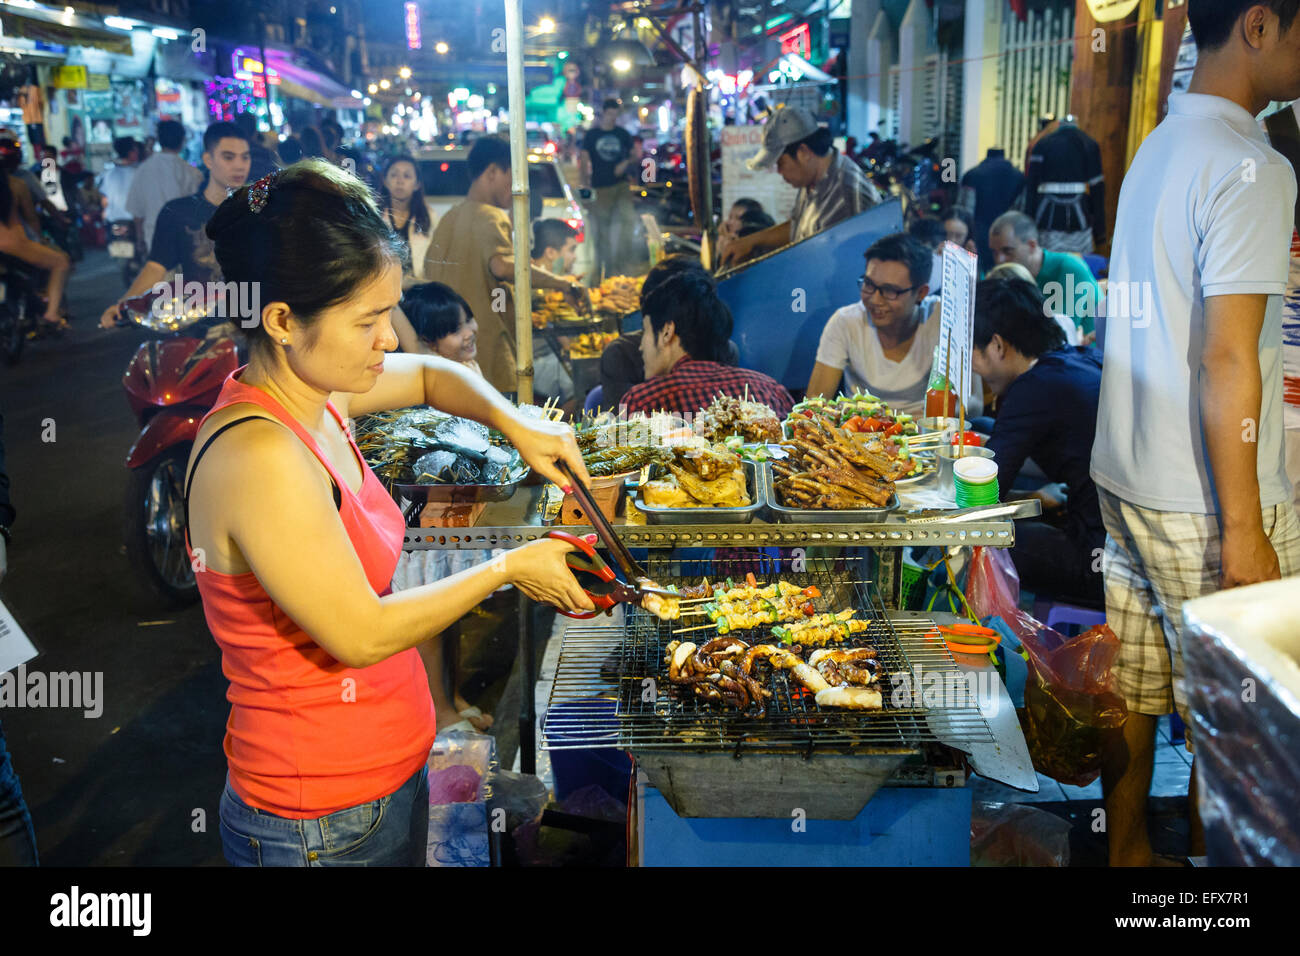 Food stall at Bui Vien Street in Pham Ngu Lao District, Ho Chi Minh City (Saigon), Vietnam. Stock Photo